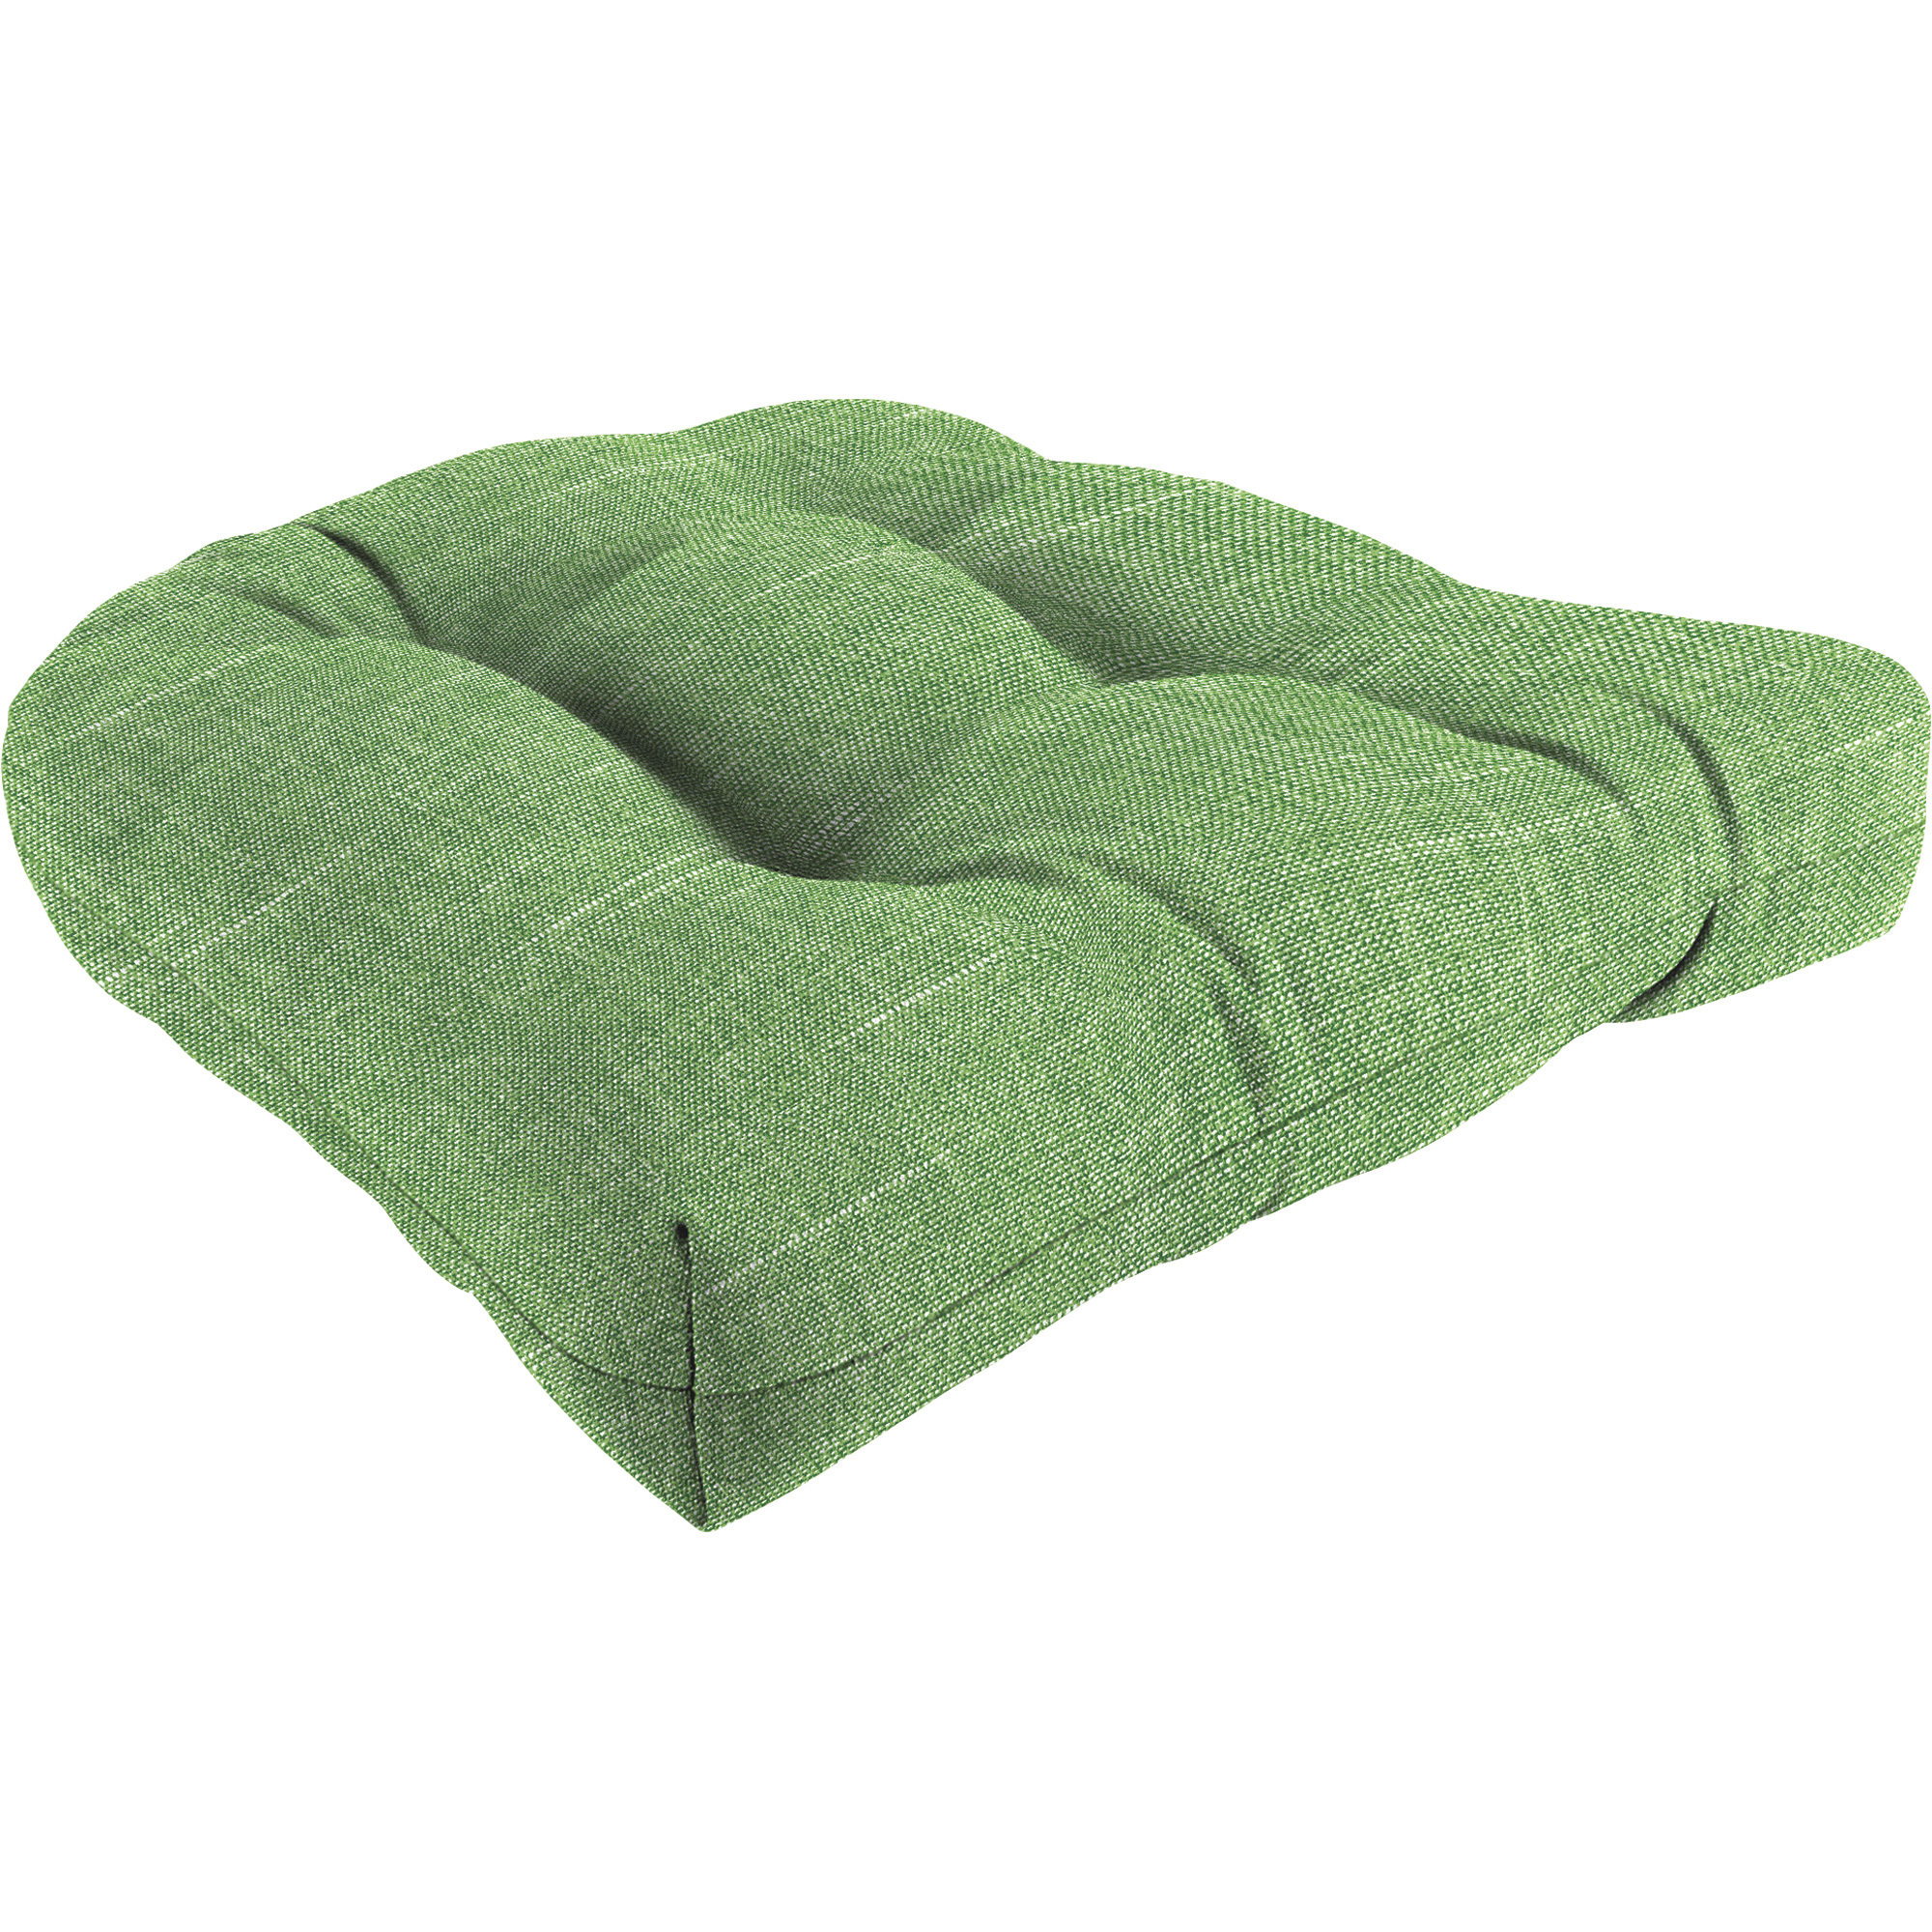 Jordan Manufacturing 18Inch Wicker Chair Cushion, Spun Polyester, Tory Palm